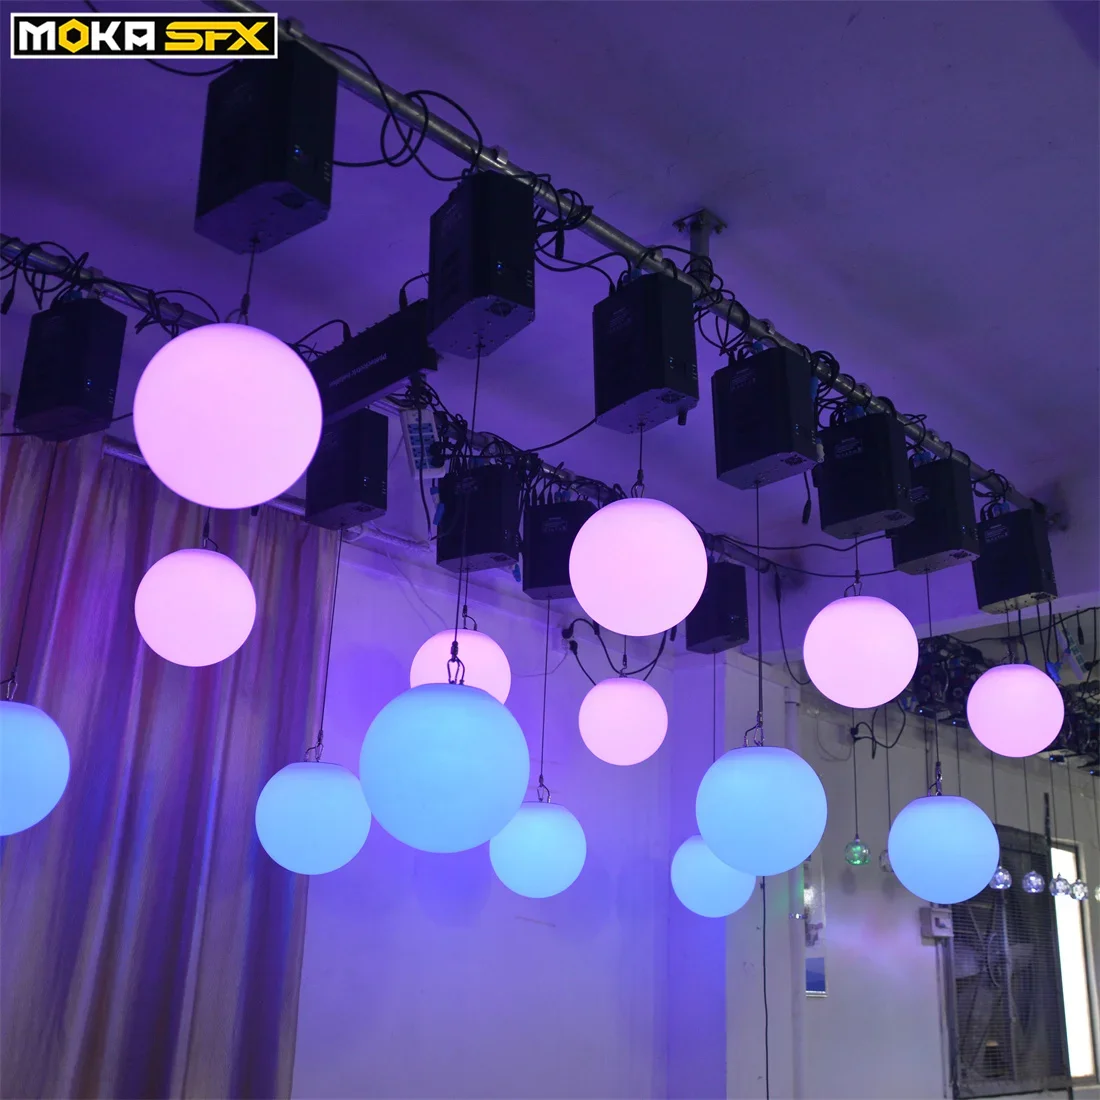 MOKA SFX RGB DMX Lifting Ball LED Effect Light for Nightclub Colorful Kinetic Stage Light Professional Up Down Winch Ball Light